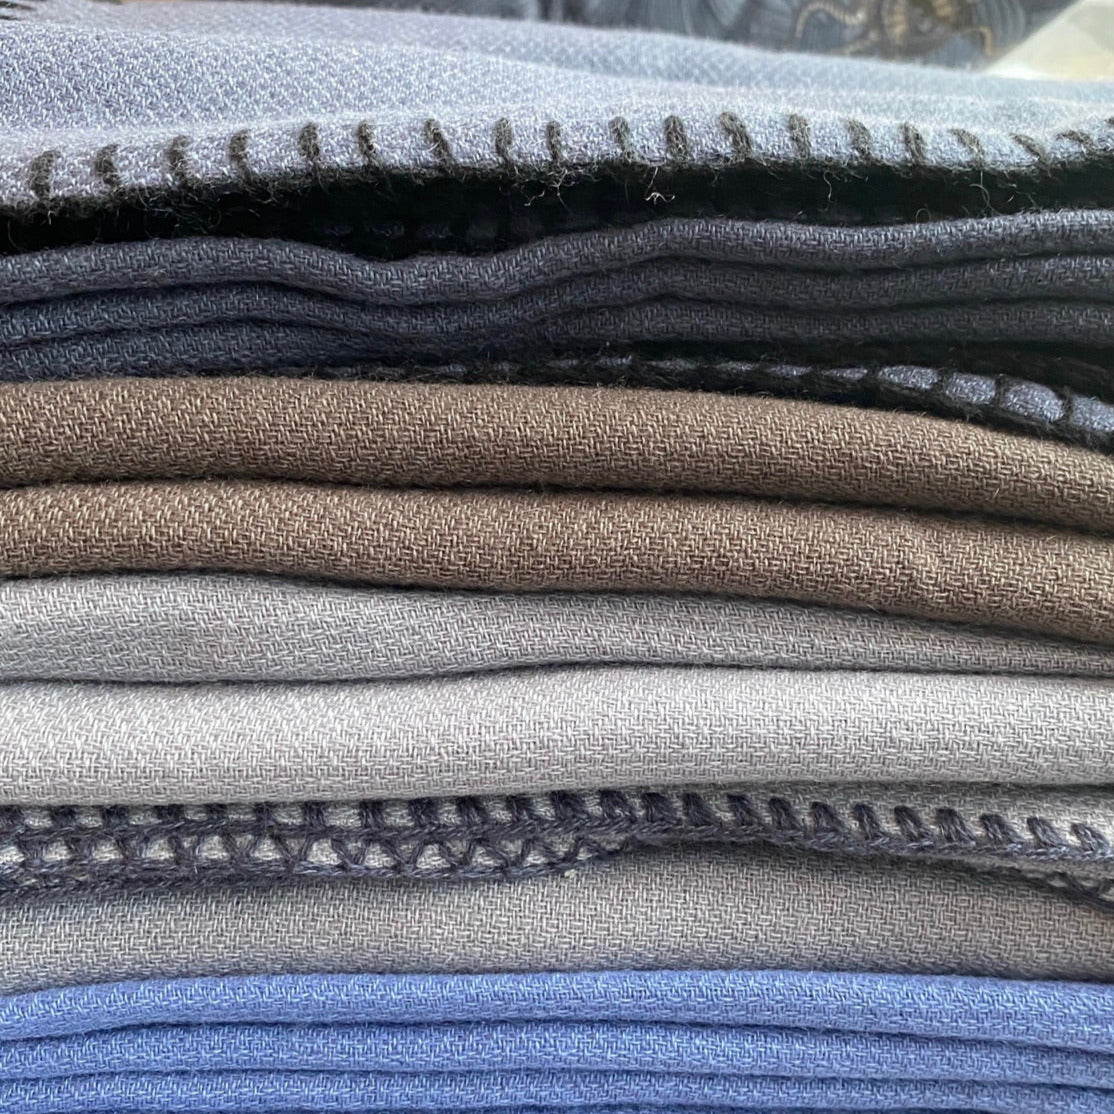 Plaid TRAVEL BLANKET - 70% cashmere 30% silk - light summer cashmere blanket 180x120 different colors